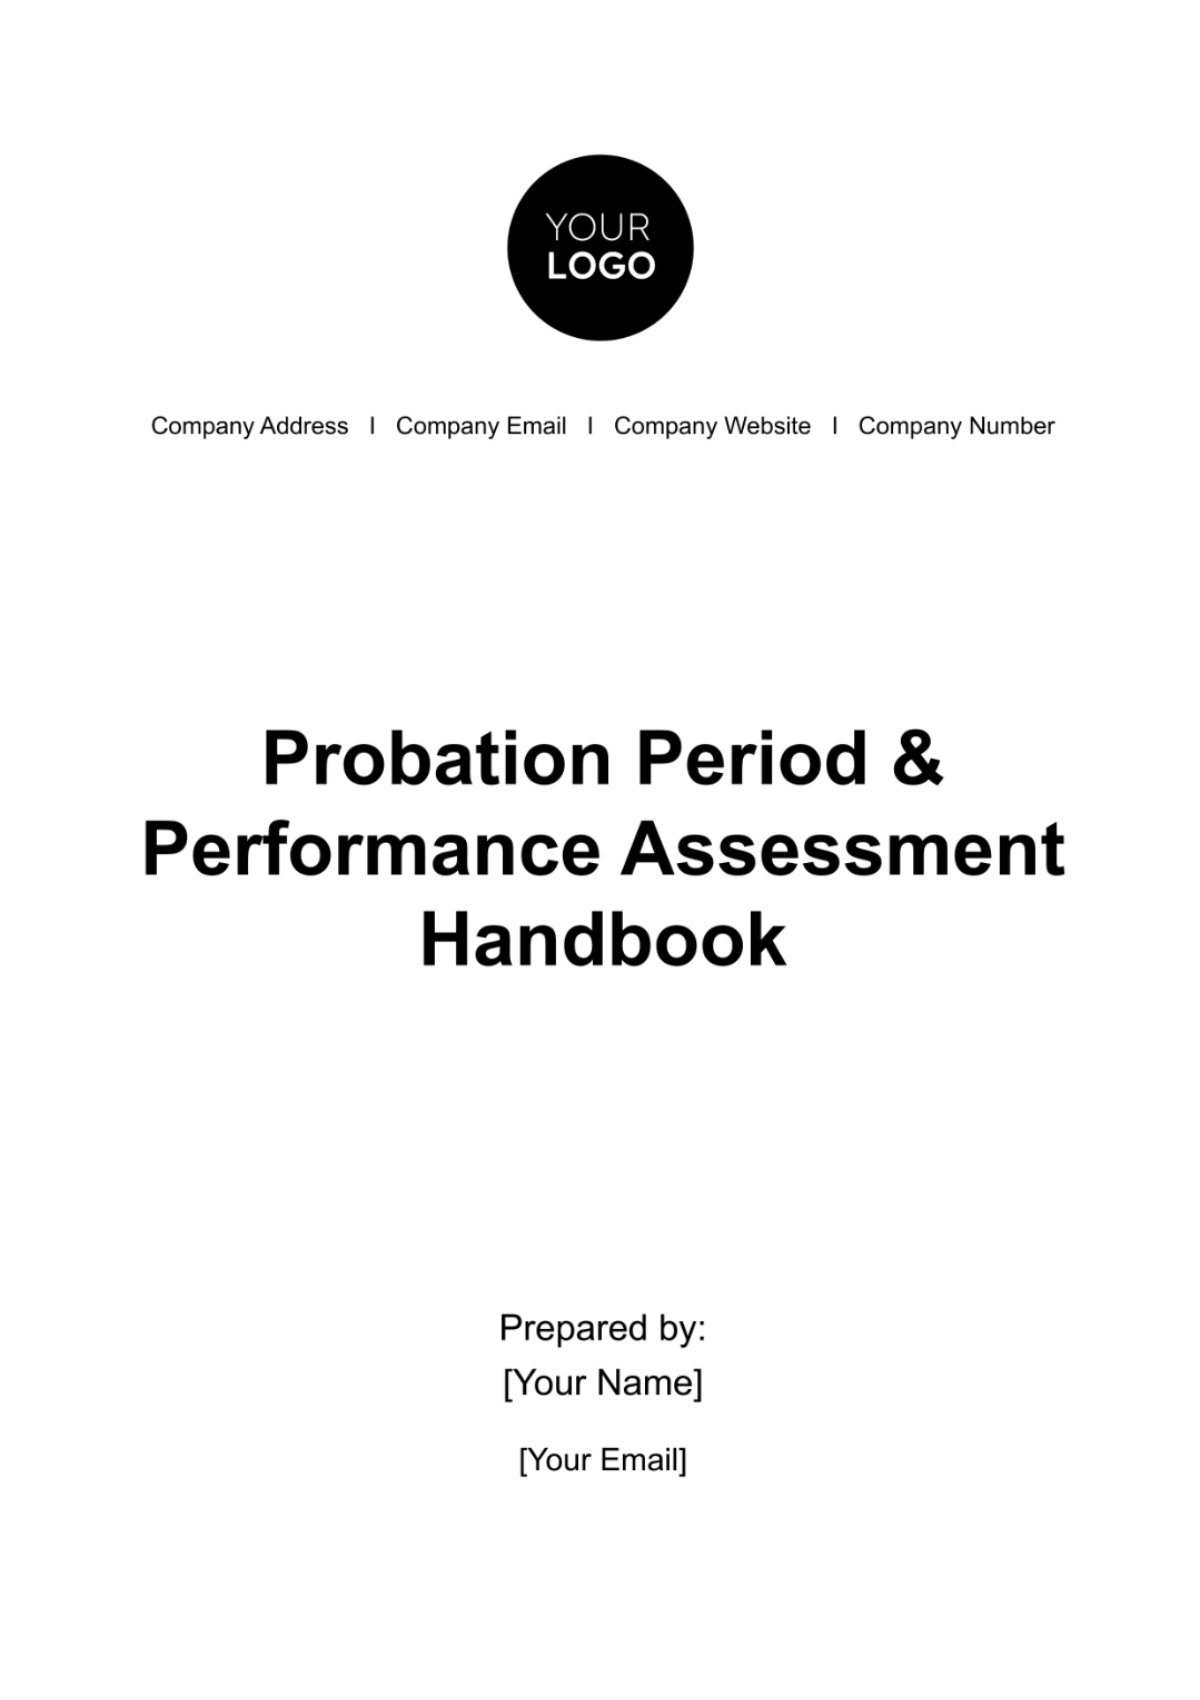 Probation Period & Performance Assessment Handbook HR Template